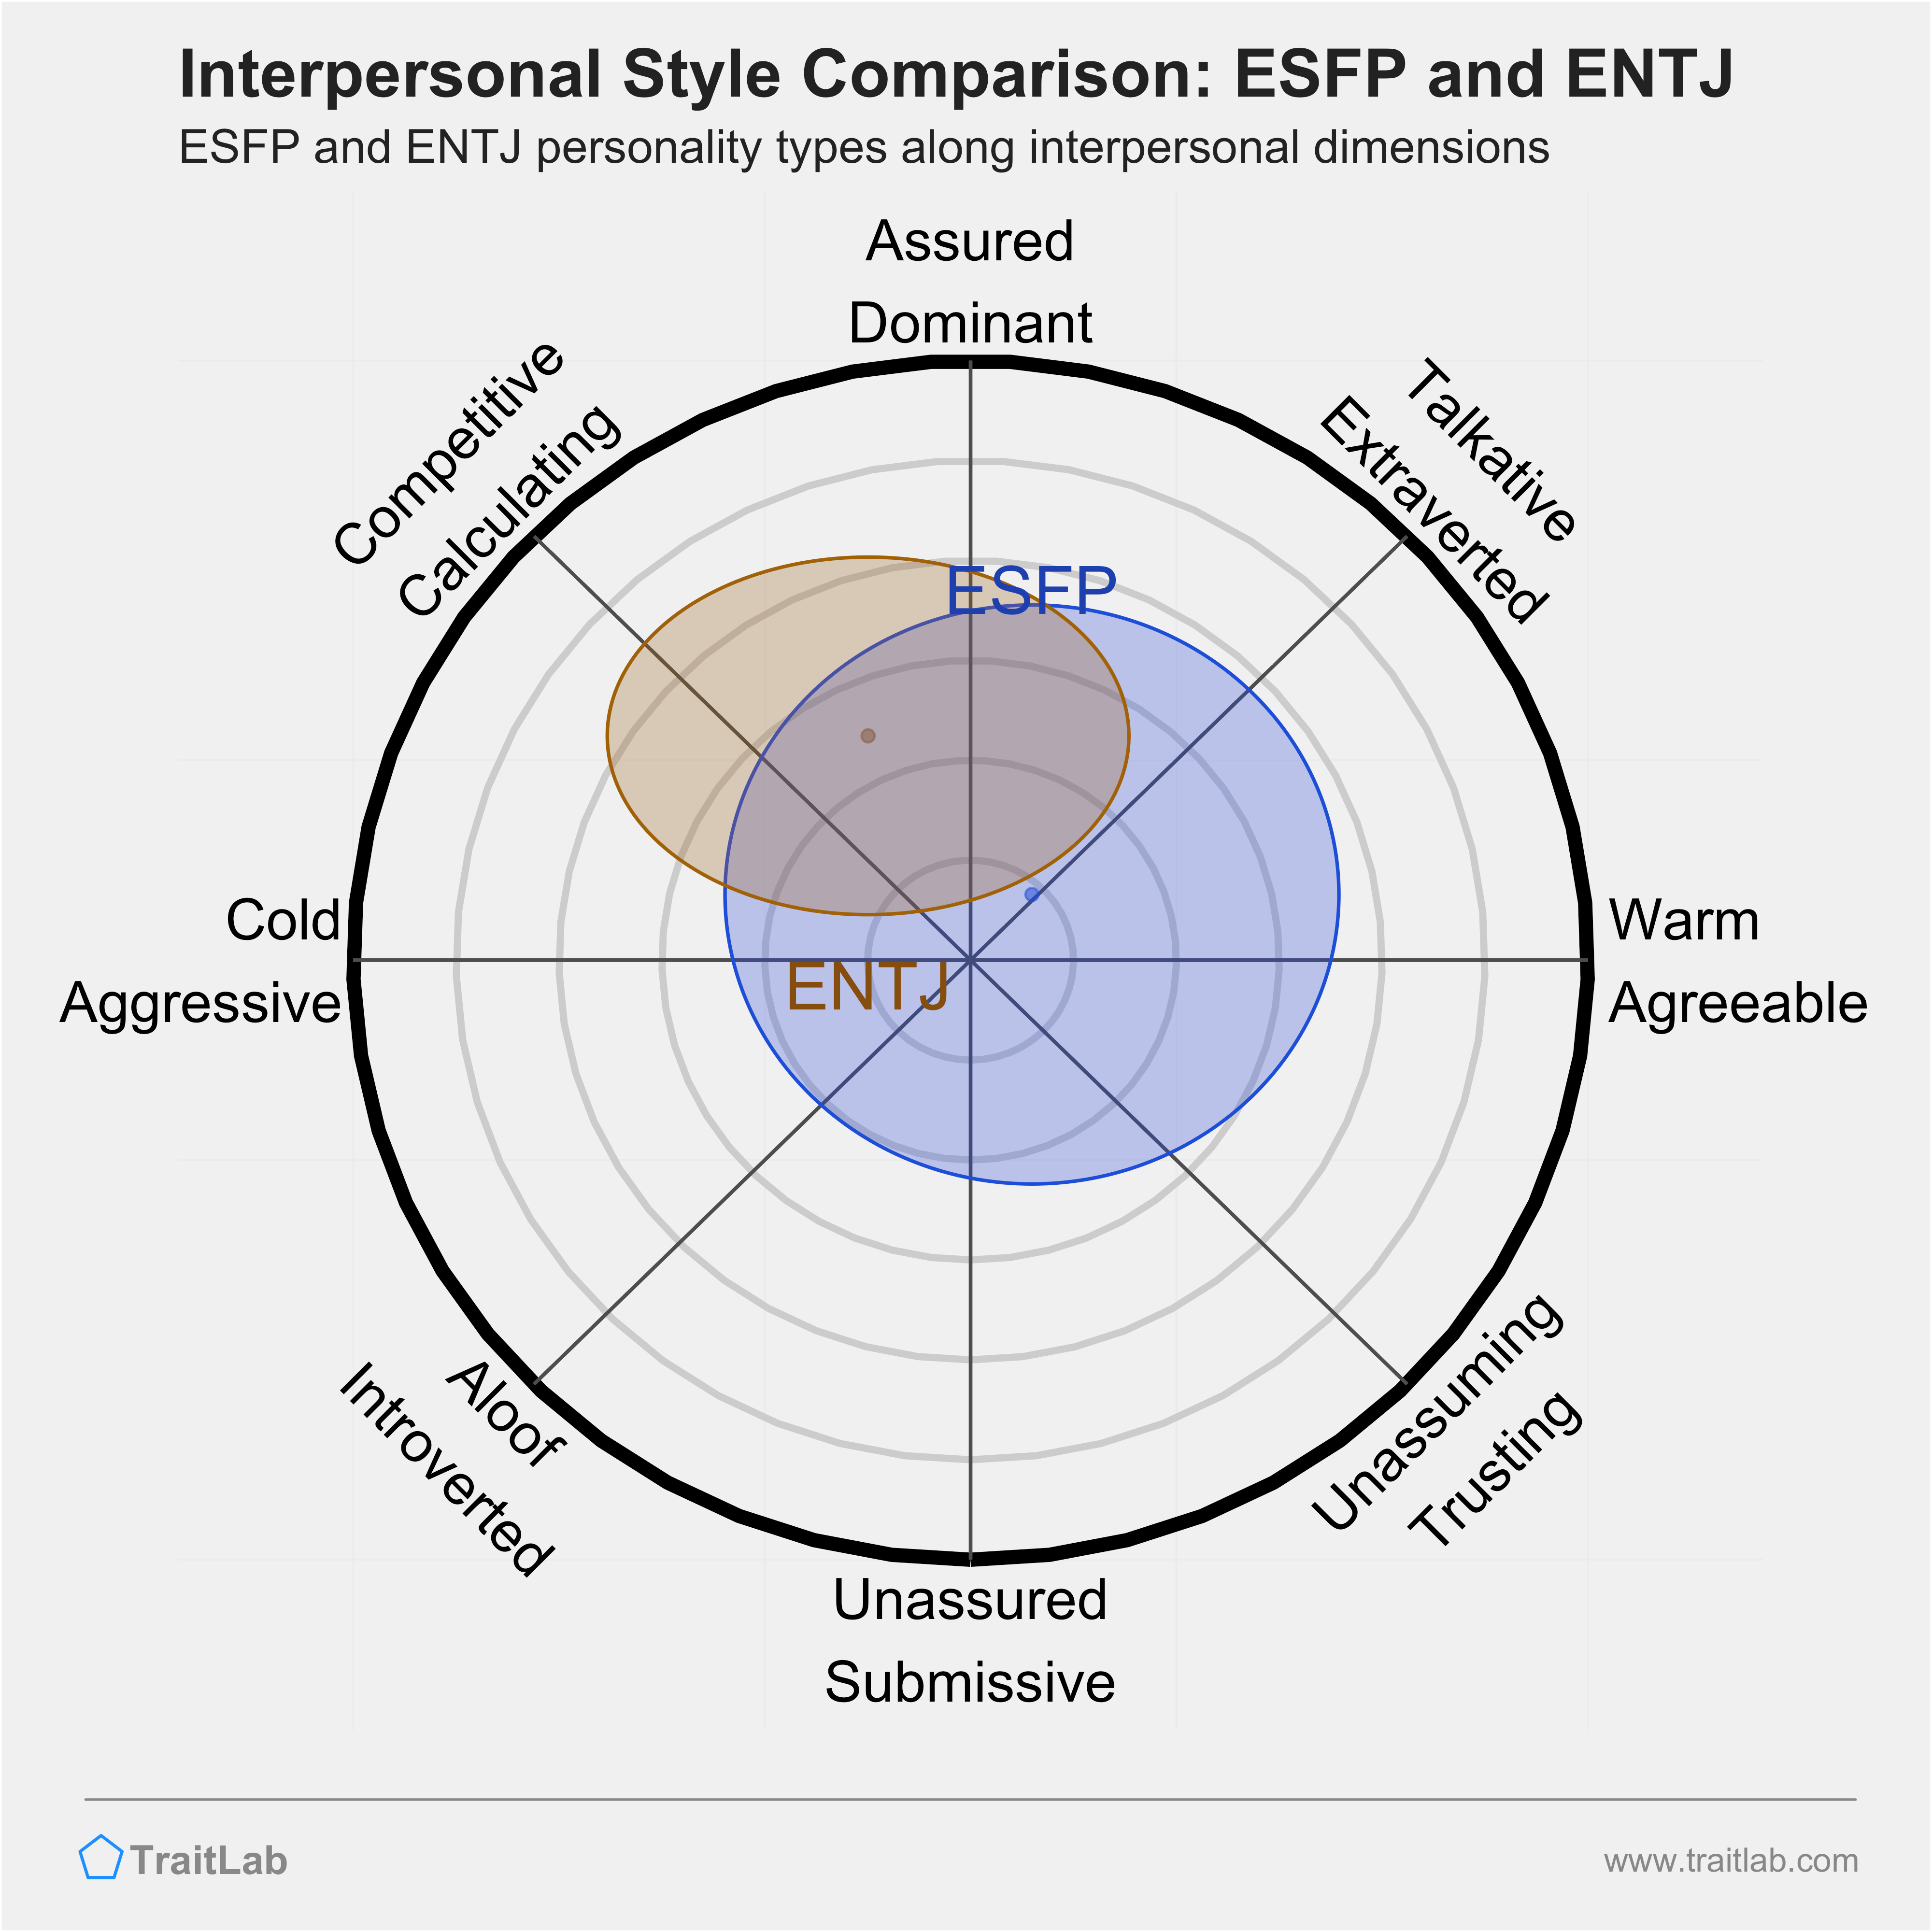 ESFP and ENTJ comparison across interpersonal dimensions